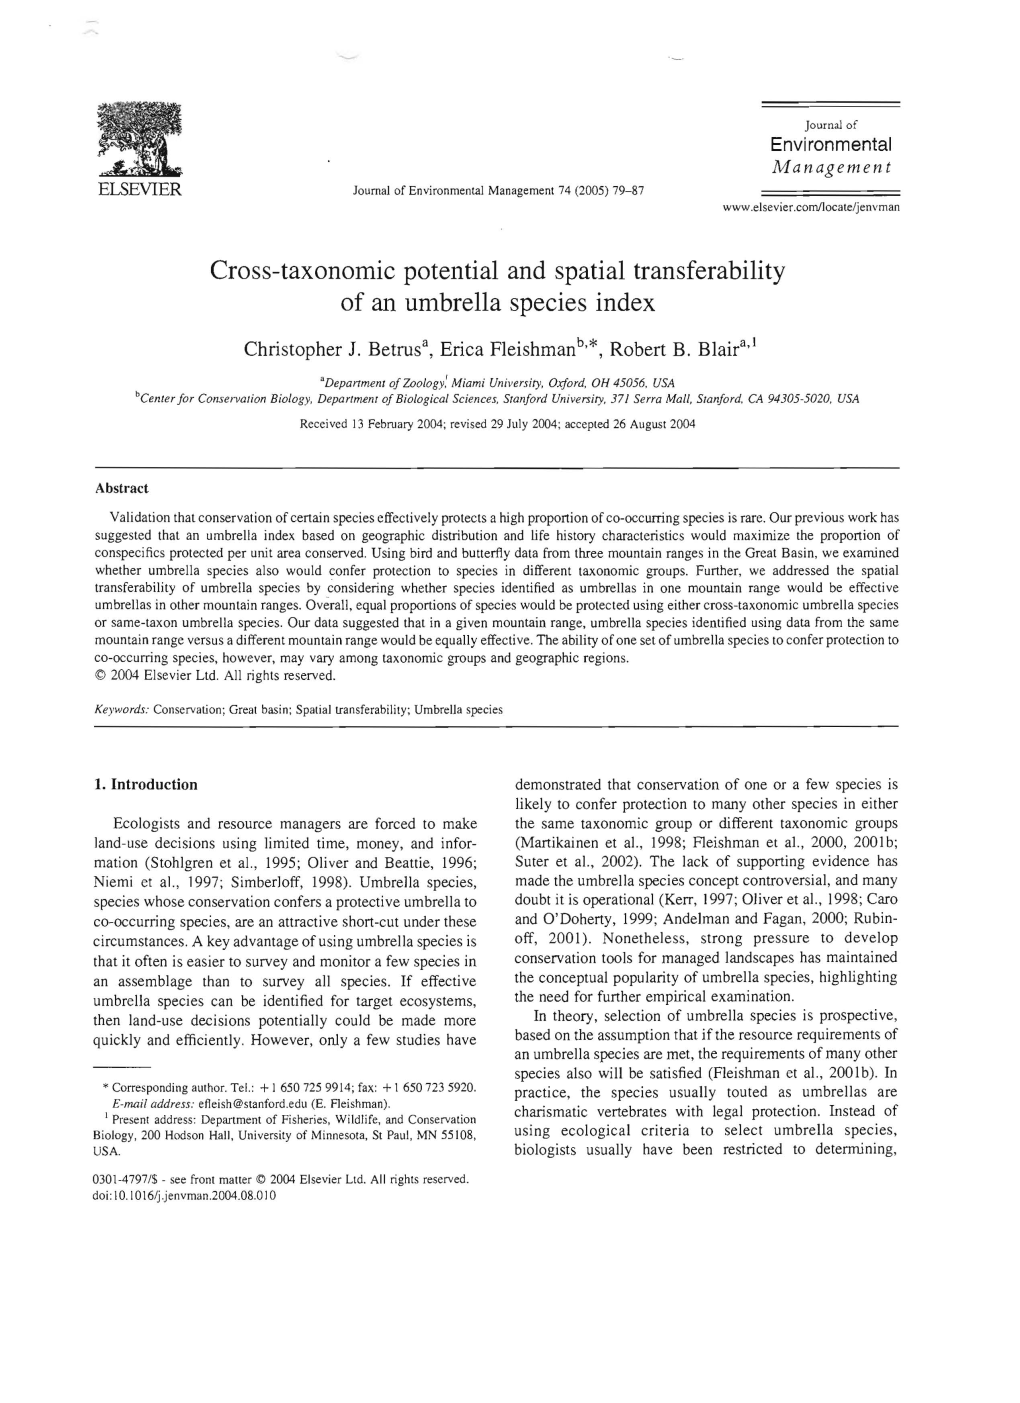 Cross-Taxonomic Potential and Spatial Transferability of an Un1brella Species Index